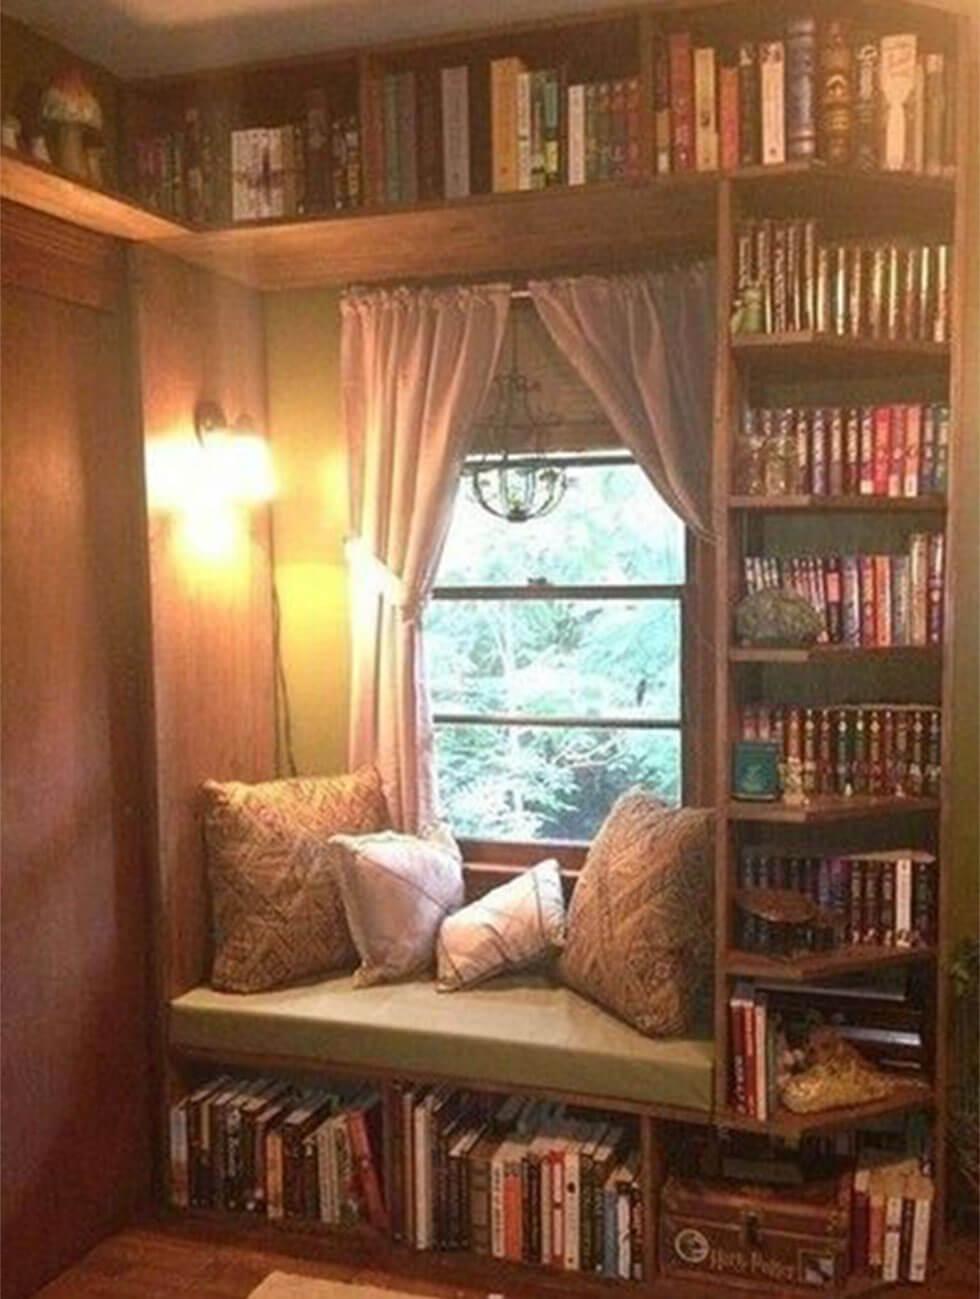 reading nook with bookshelves in walnut tones